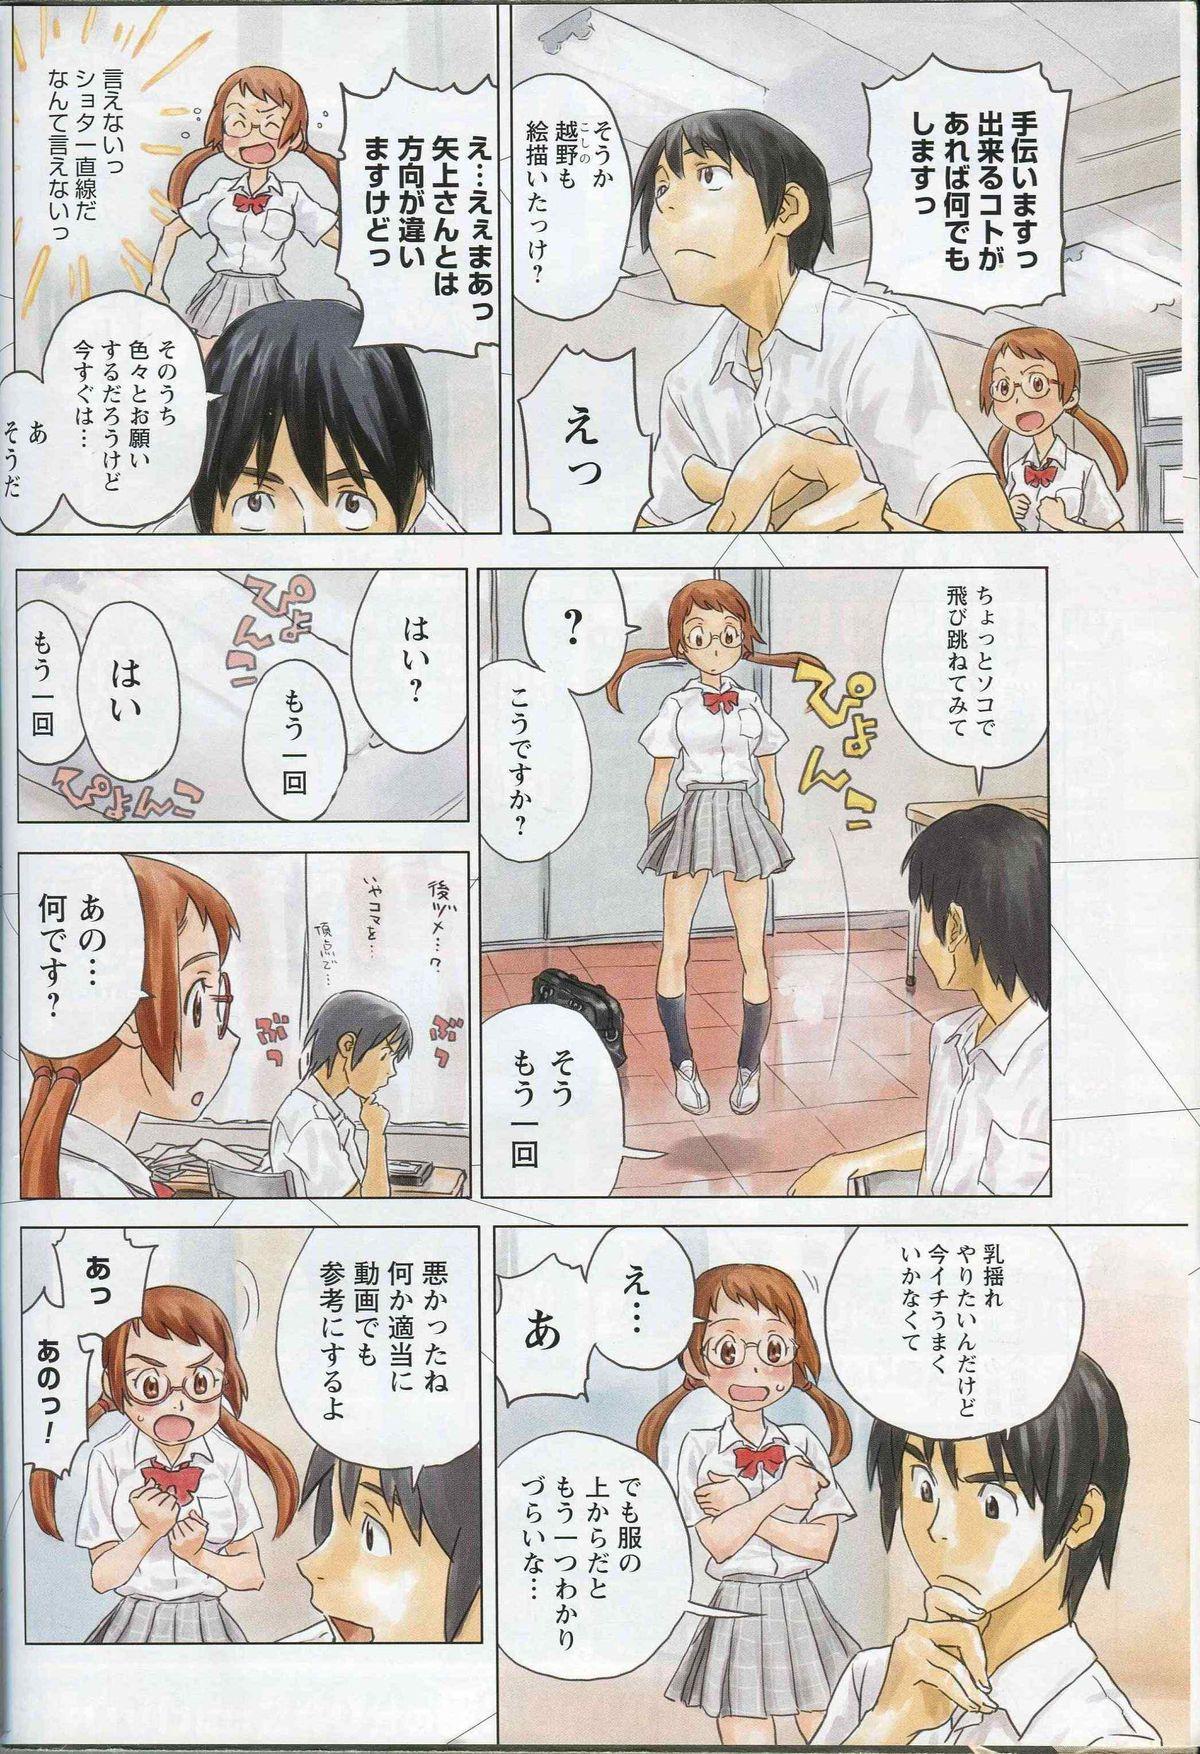 Fun Sakuga Baka Ichidai Hair - Page 2